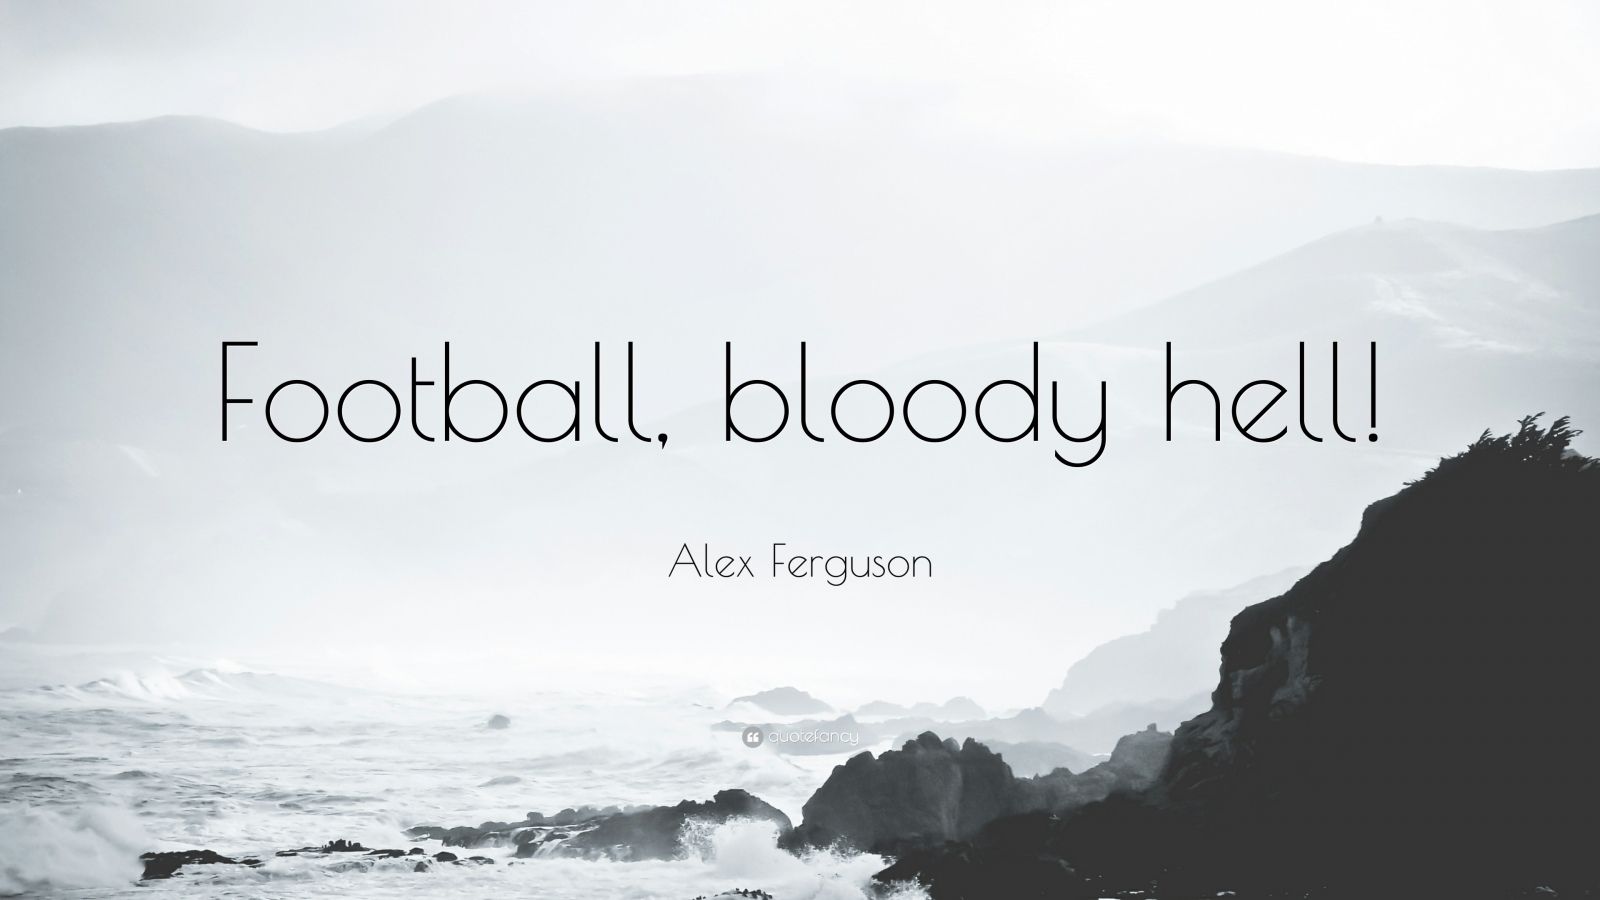 Alex Ferguson Quote: “Football, bloody hell!” (12 wallpaper)